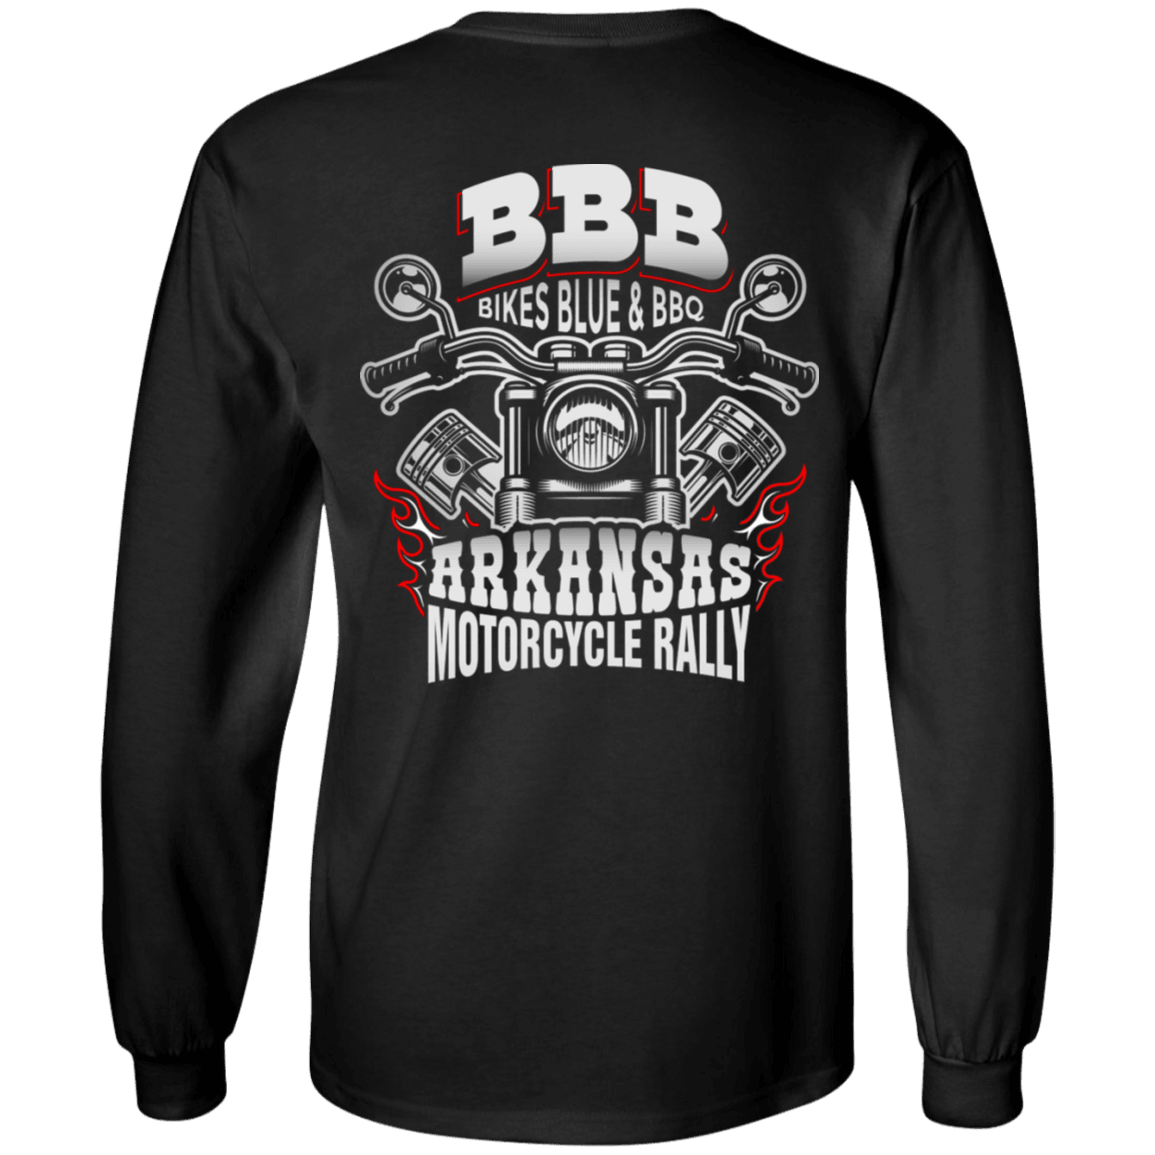 Bikes Blues & Bbq Arkansas Motorcycle Rally Long Sleeve T-Shirt, Cotton, Black - American Legend Rider